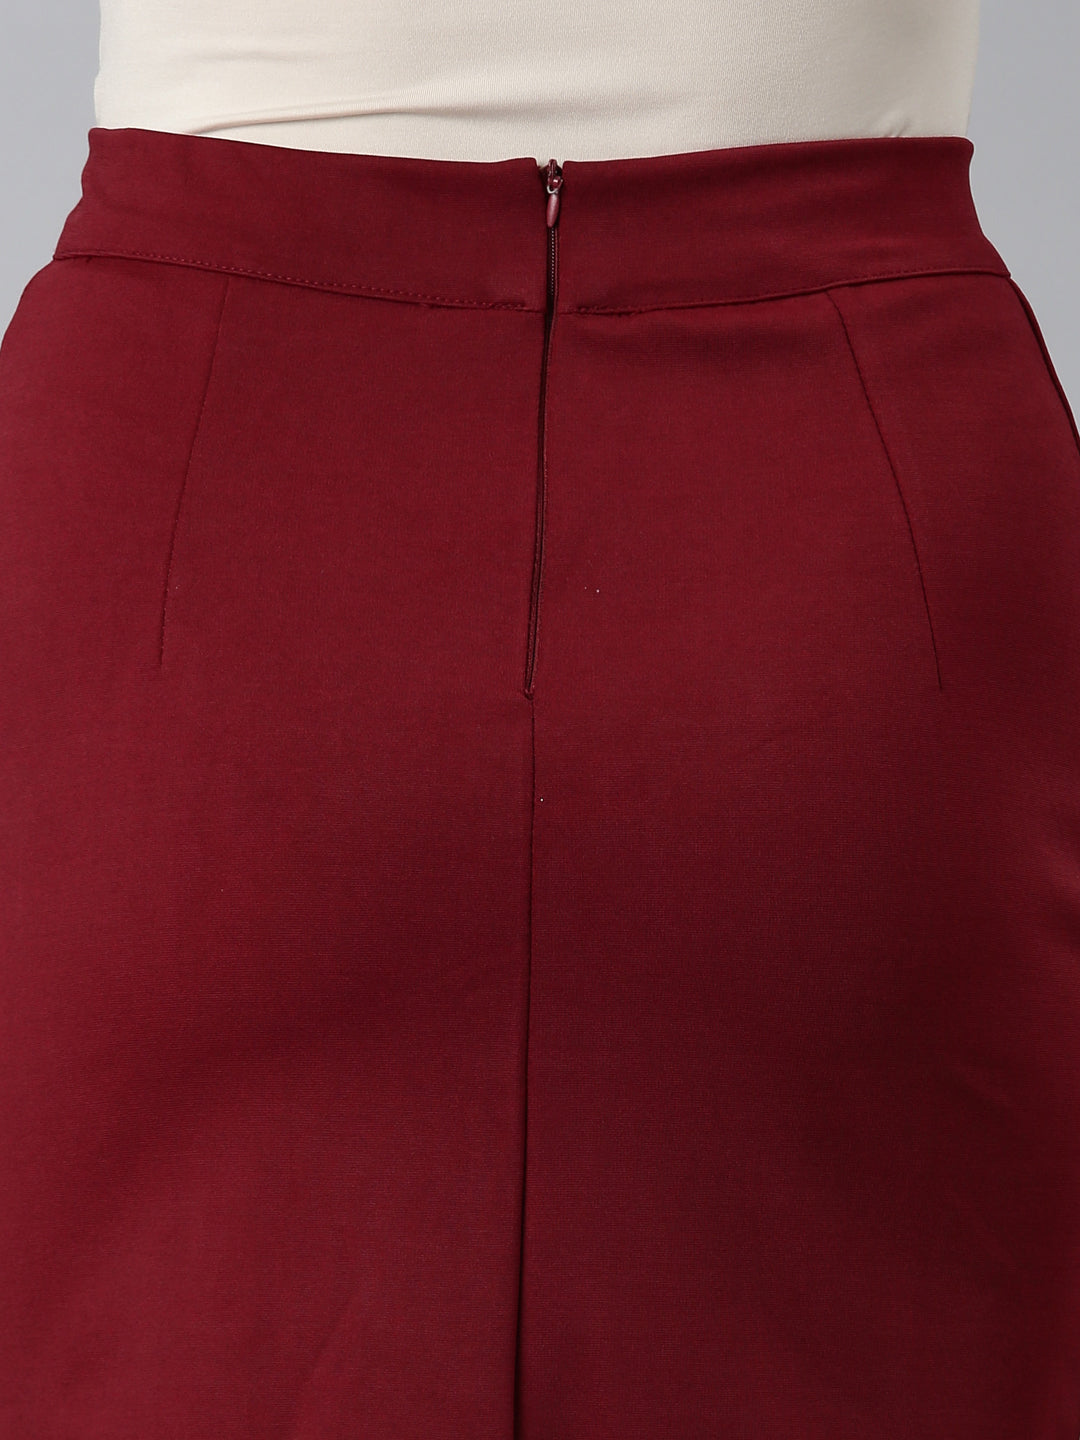 Women Maroon Solid Pencil Skirt